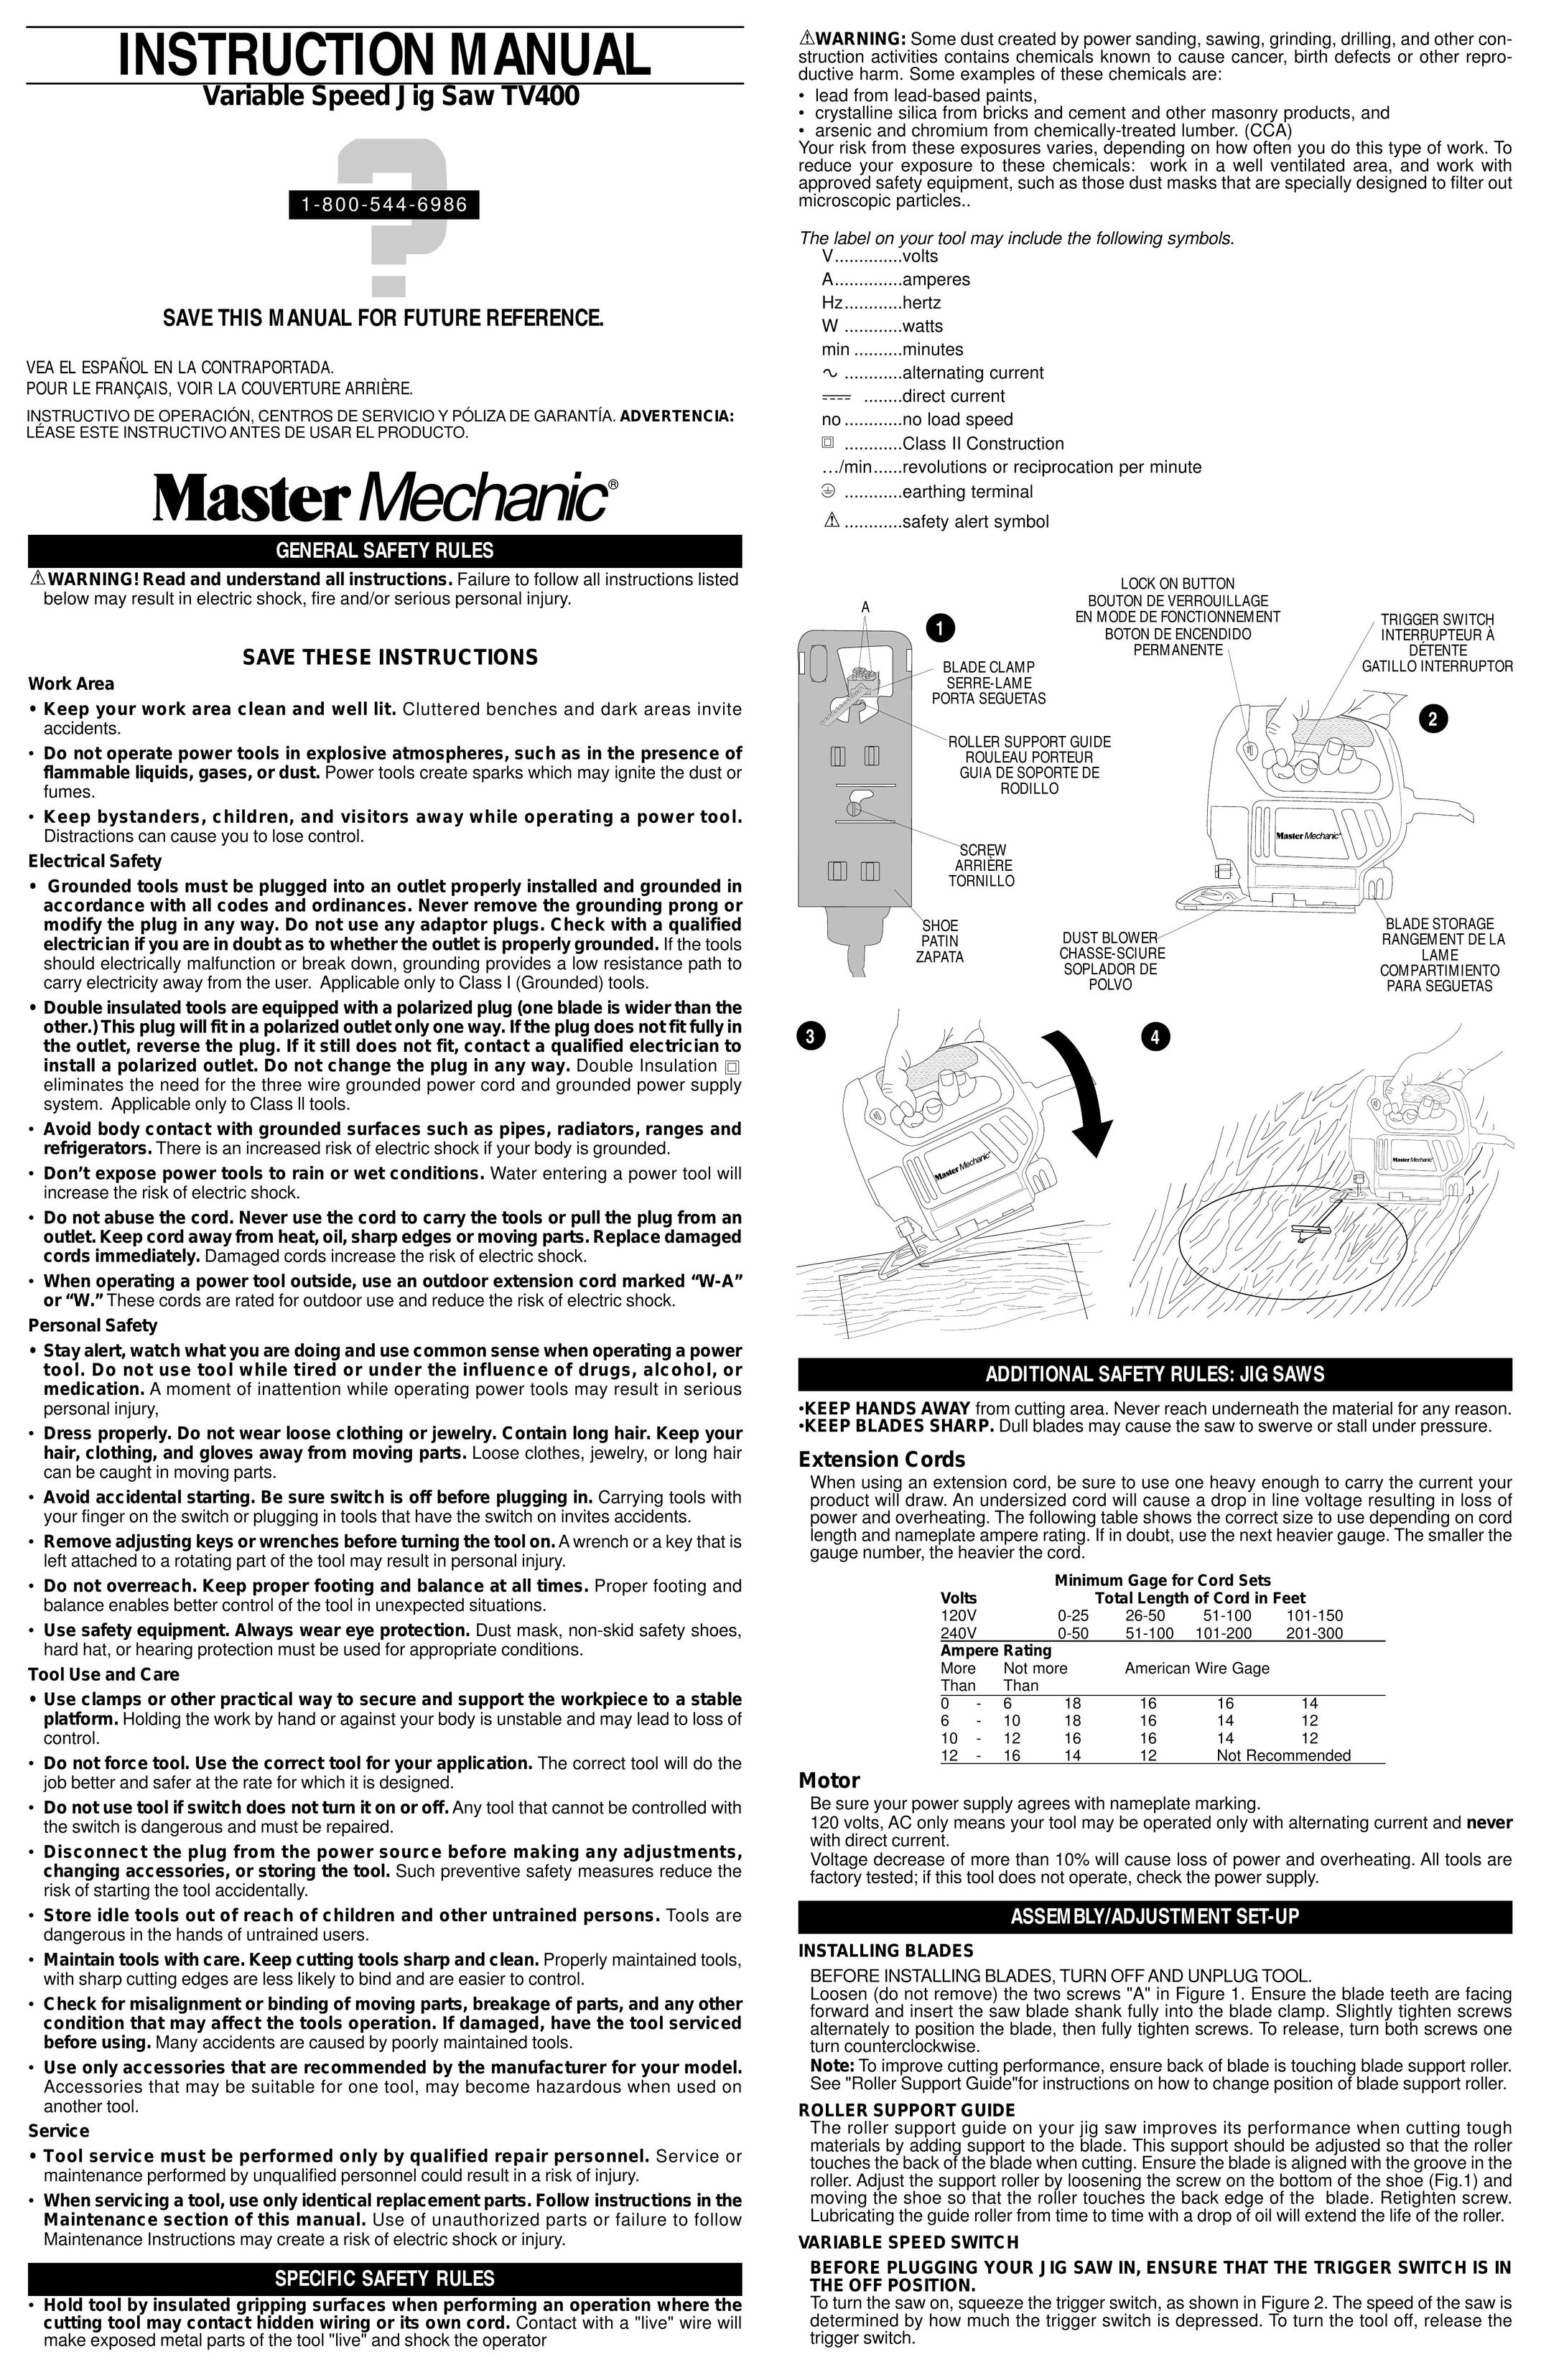 Black & Decker 389995-00 Saw User Manual